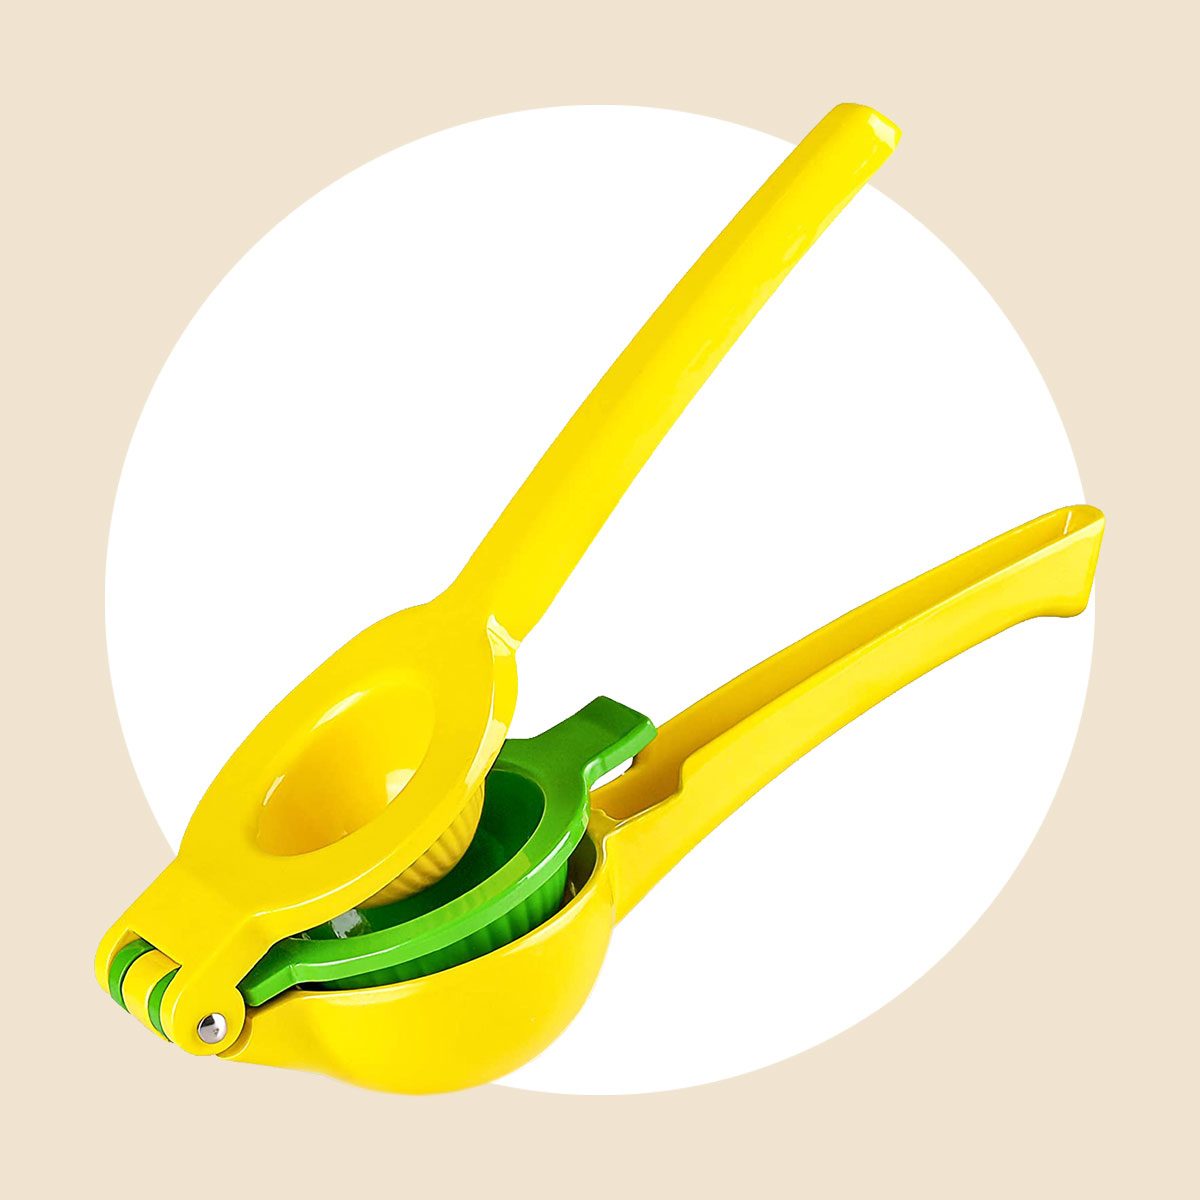 Useful utensils